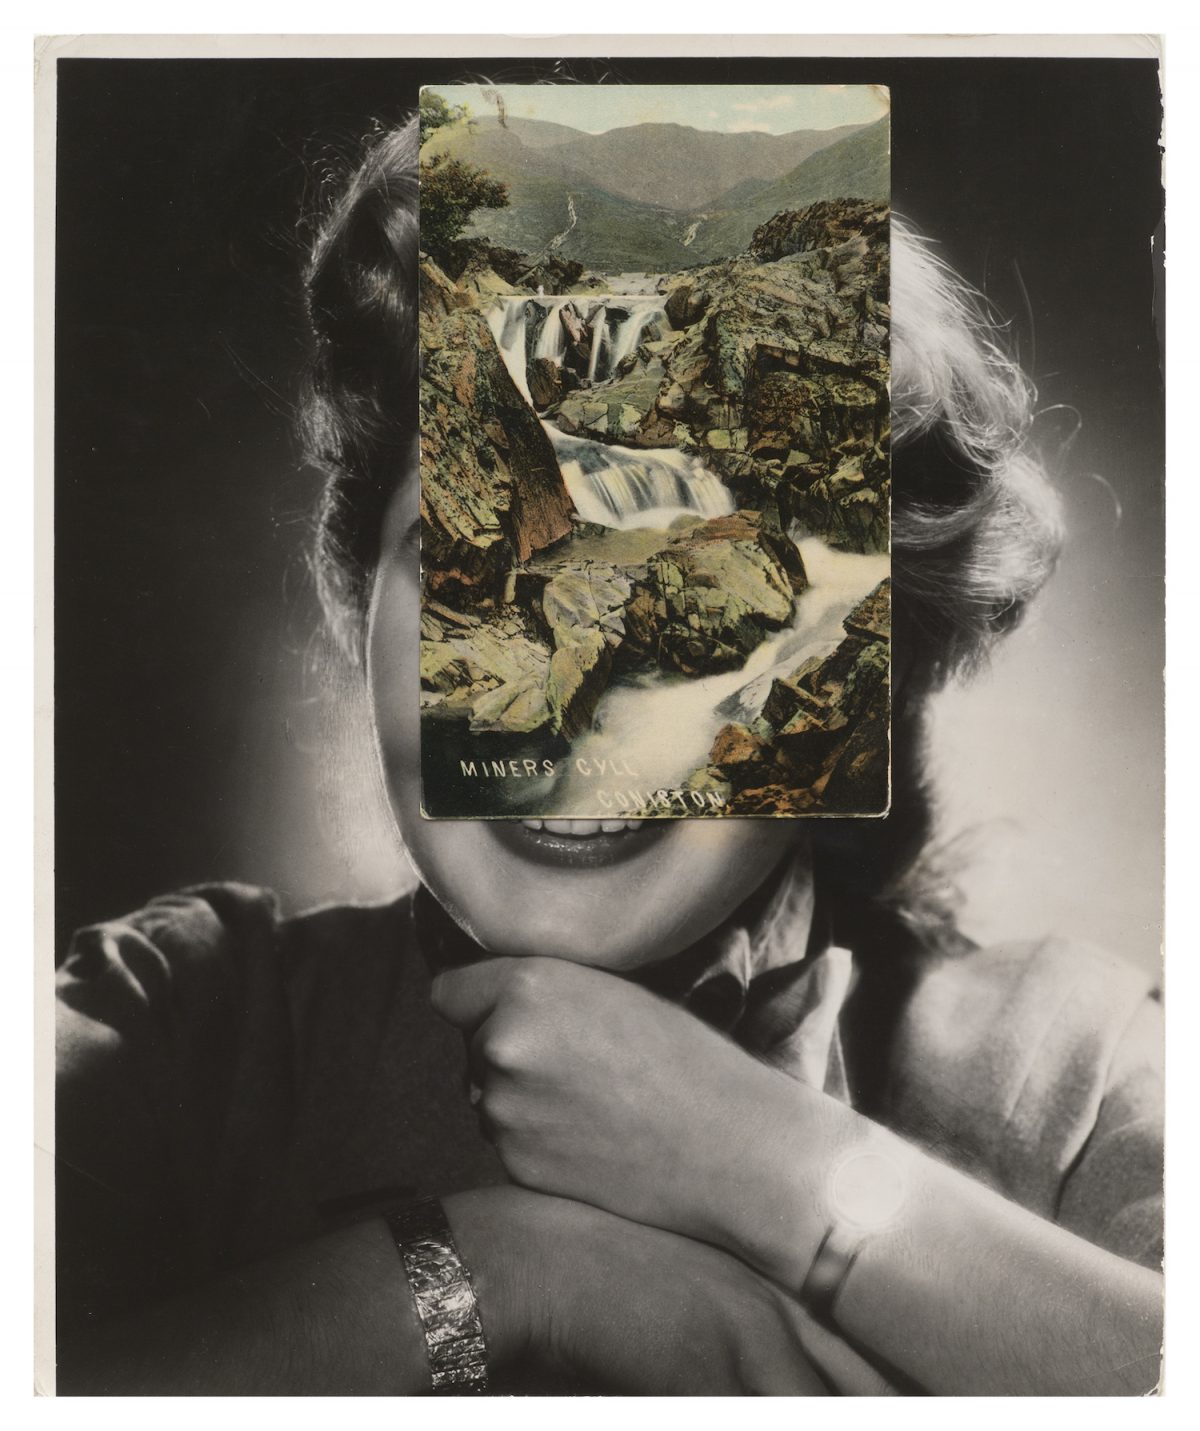 John Stezaker, collage, cutting, photographs